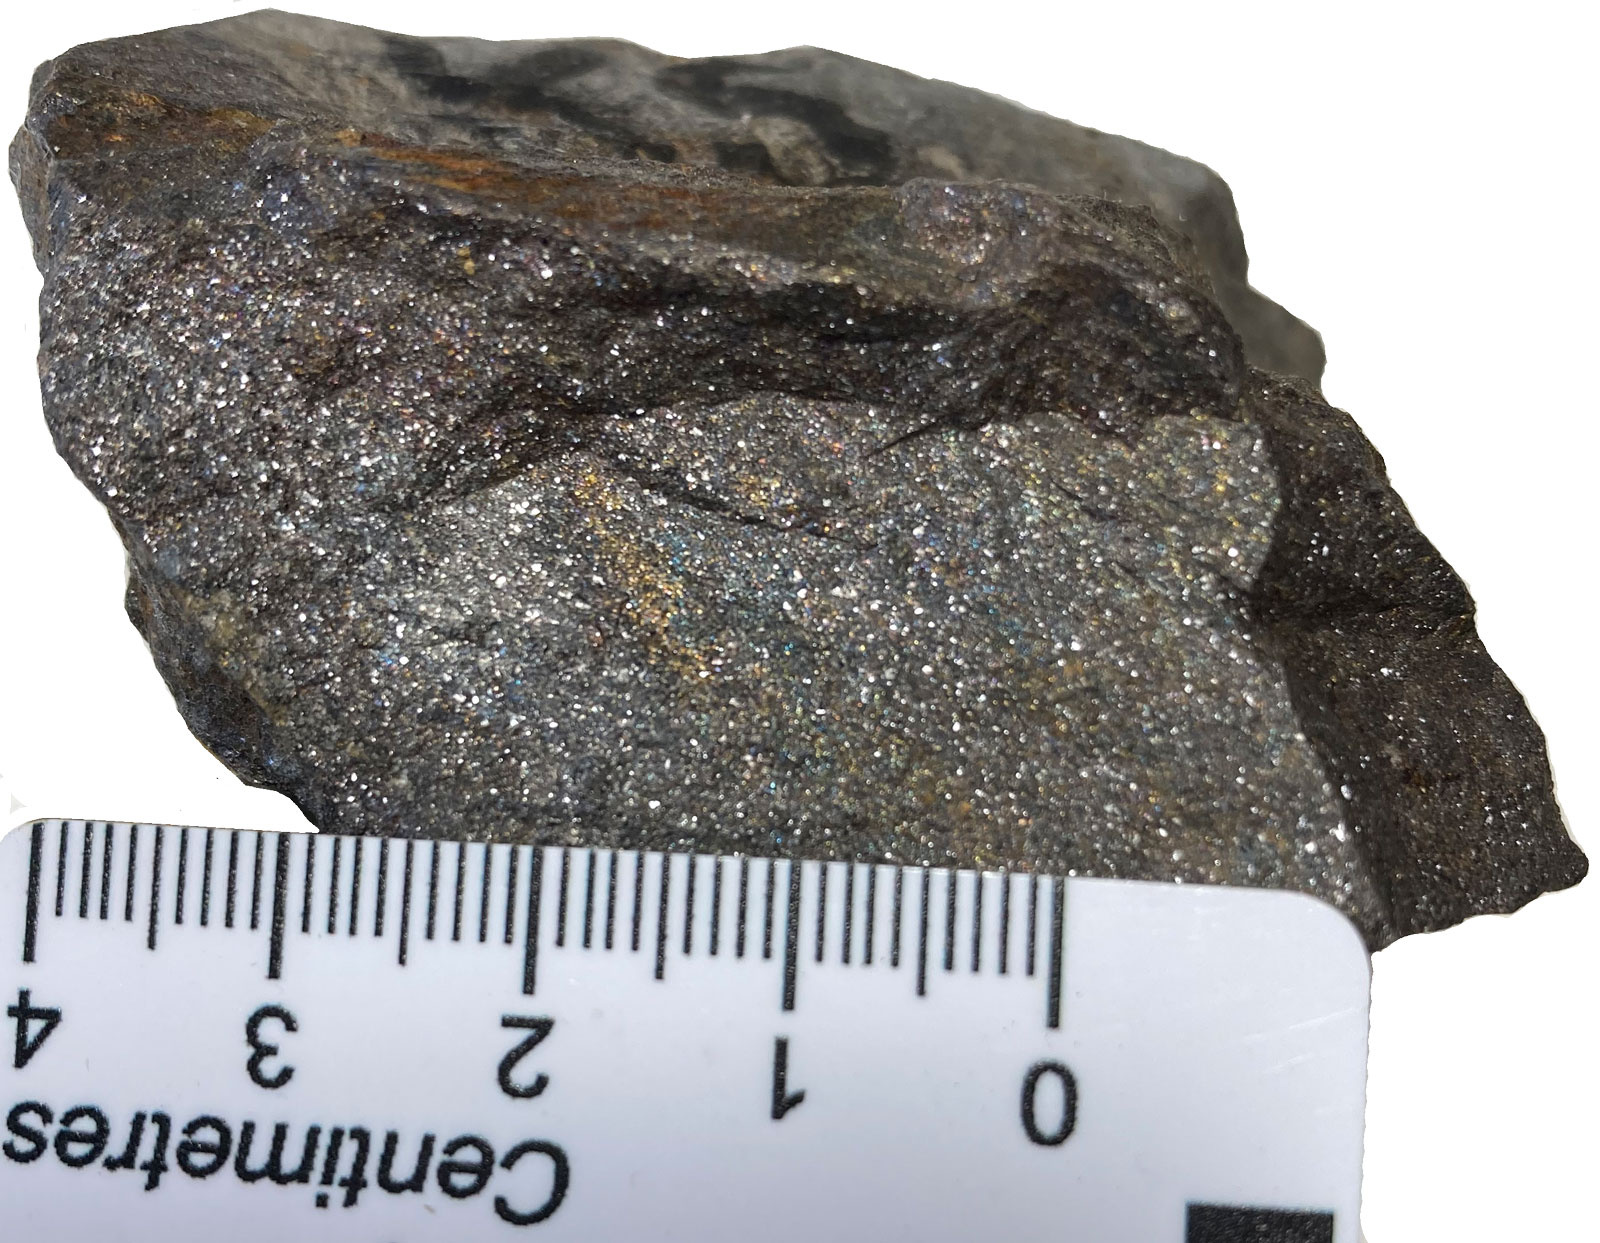 Kidd Creek massive sphalerite-chalcopyrite sulphides